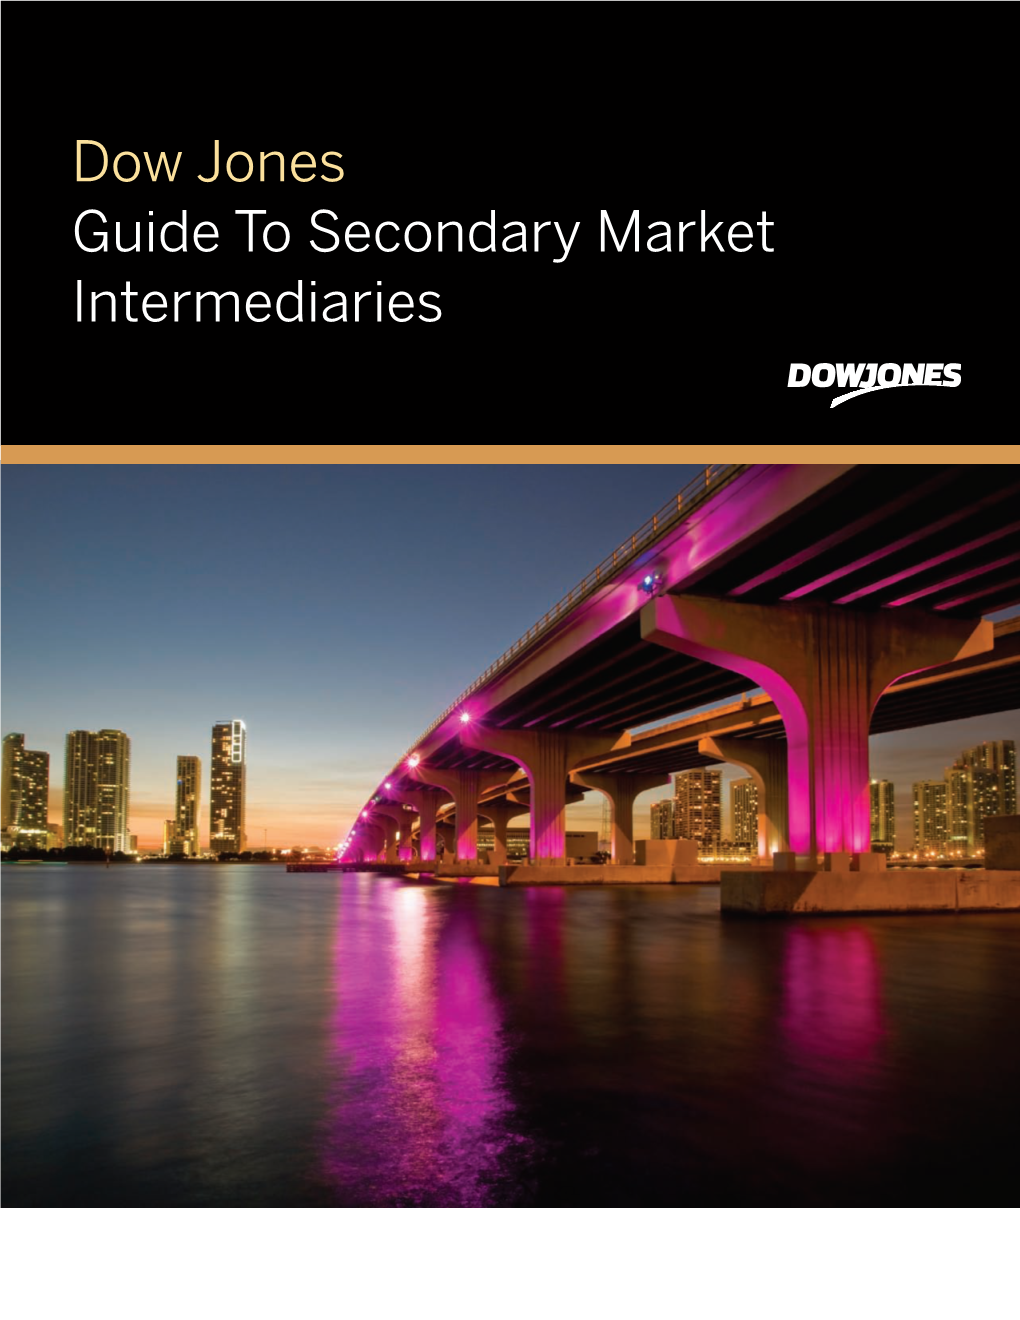 Dow Jones Guide to Secondary Market Intermediaries